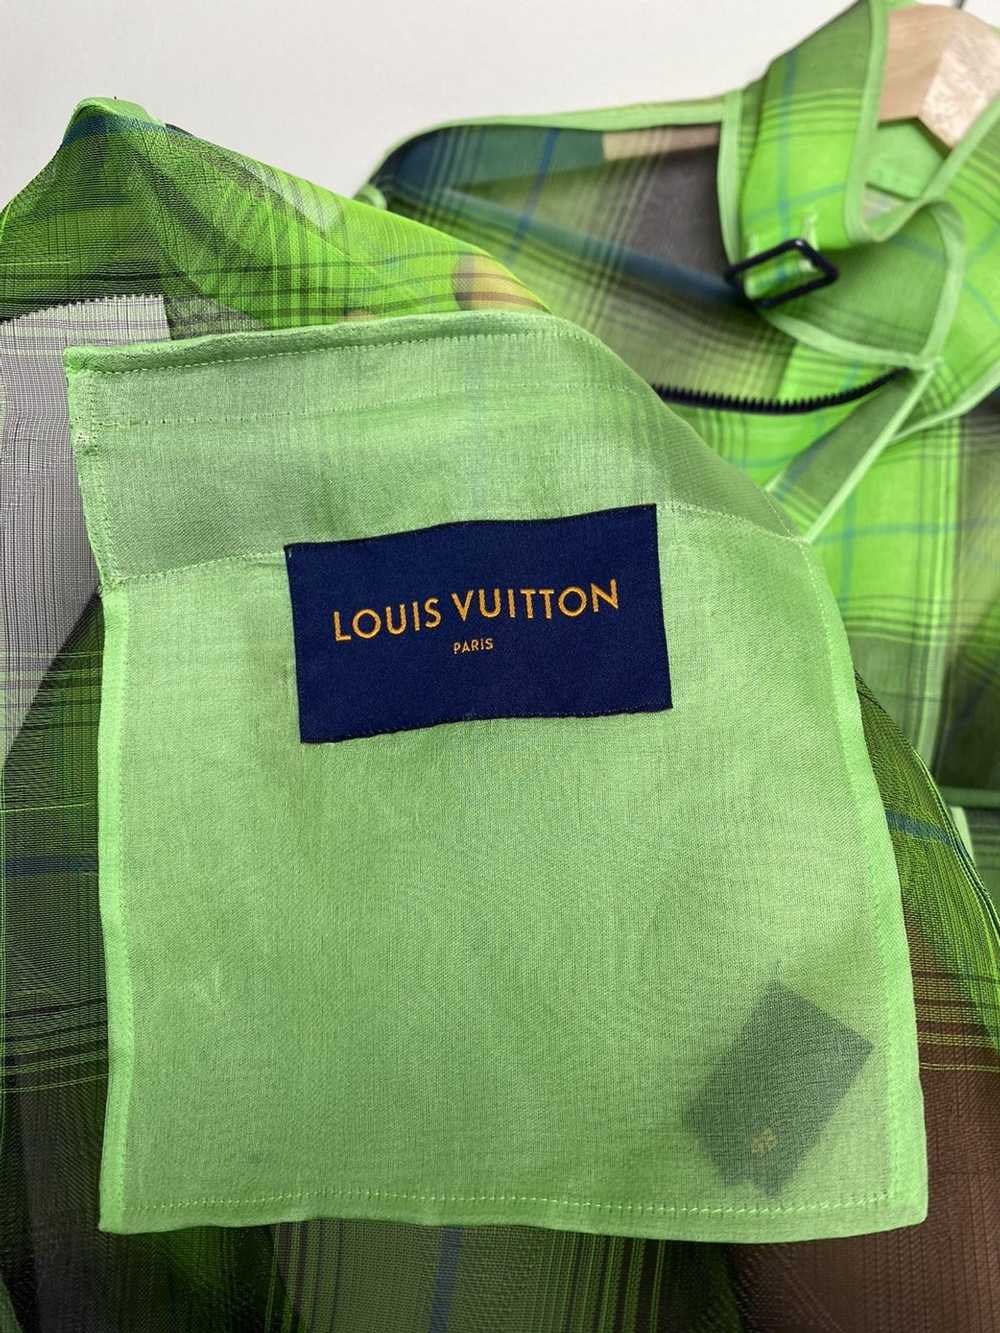 Virgil Abloh x MCA Figures of Speech Louis Vuitton Tee Orange Men's - SS19  - US